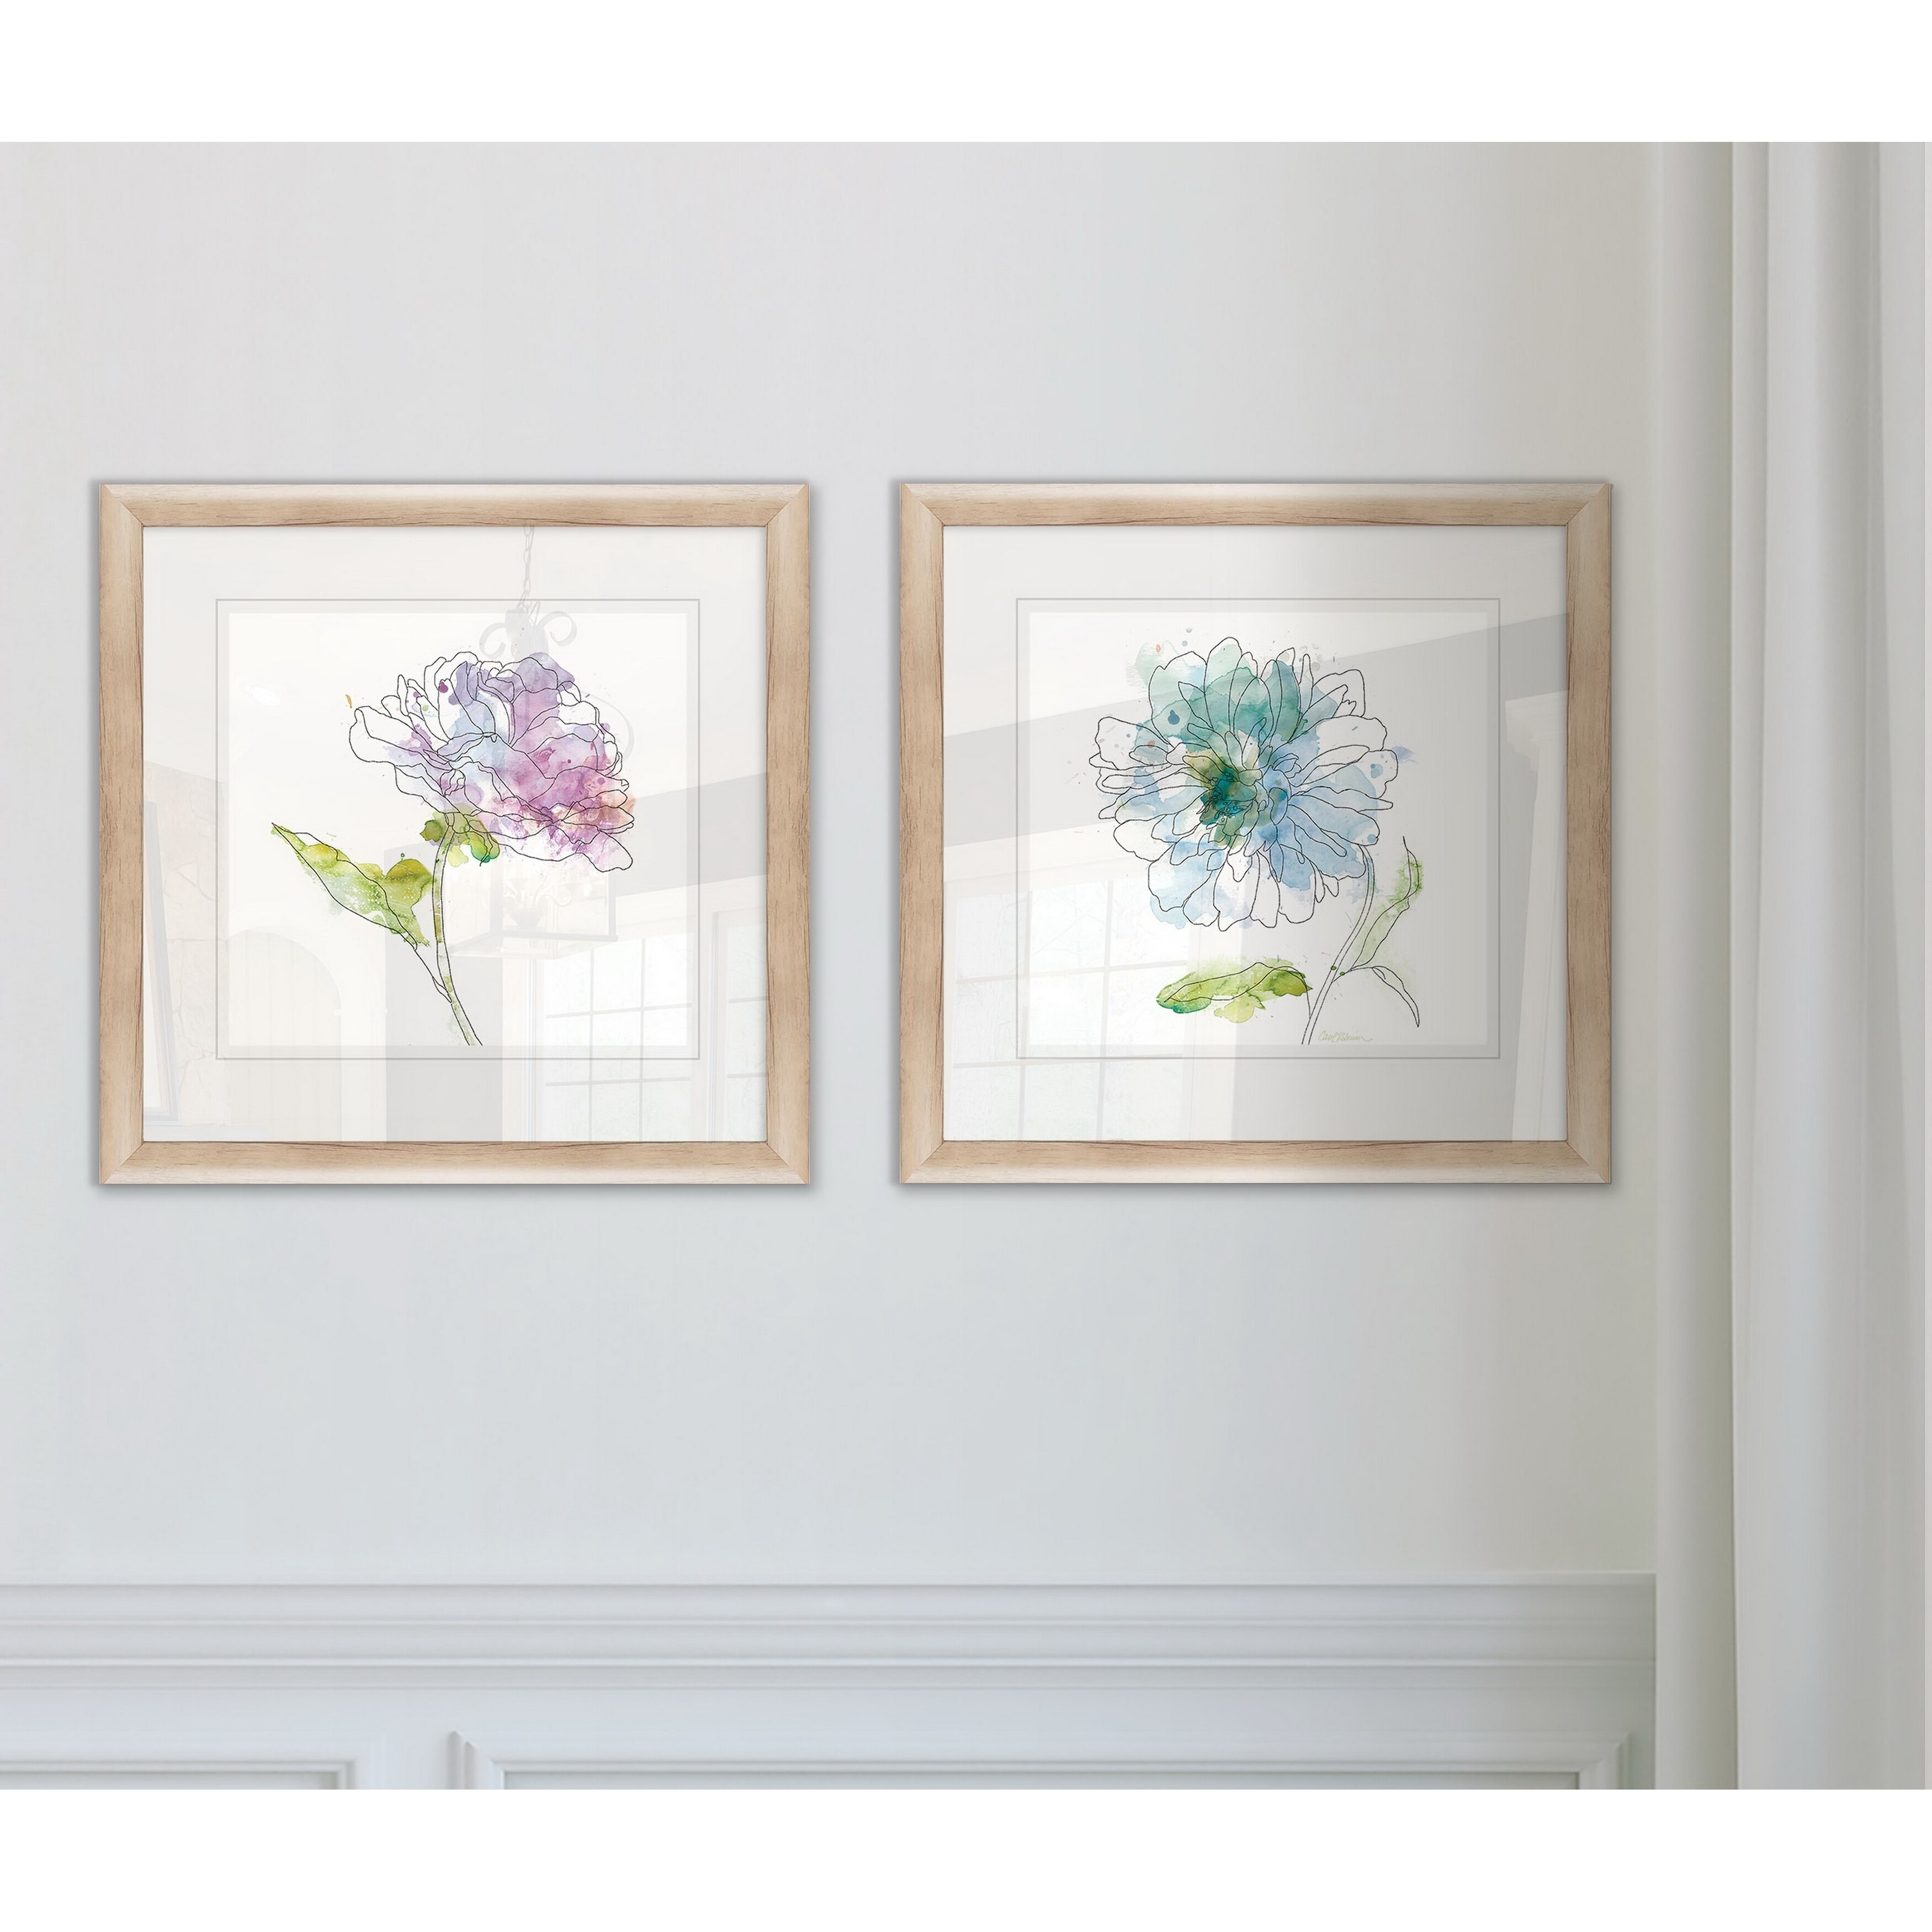 Wexford Home 'Simple Study III' Framed Art Set Small 37182400007 | eBay